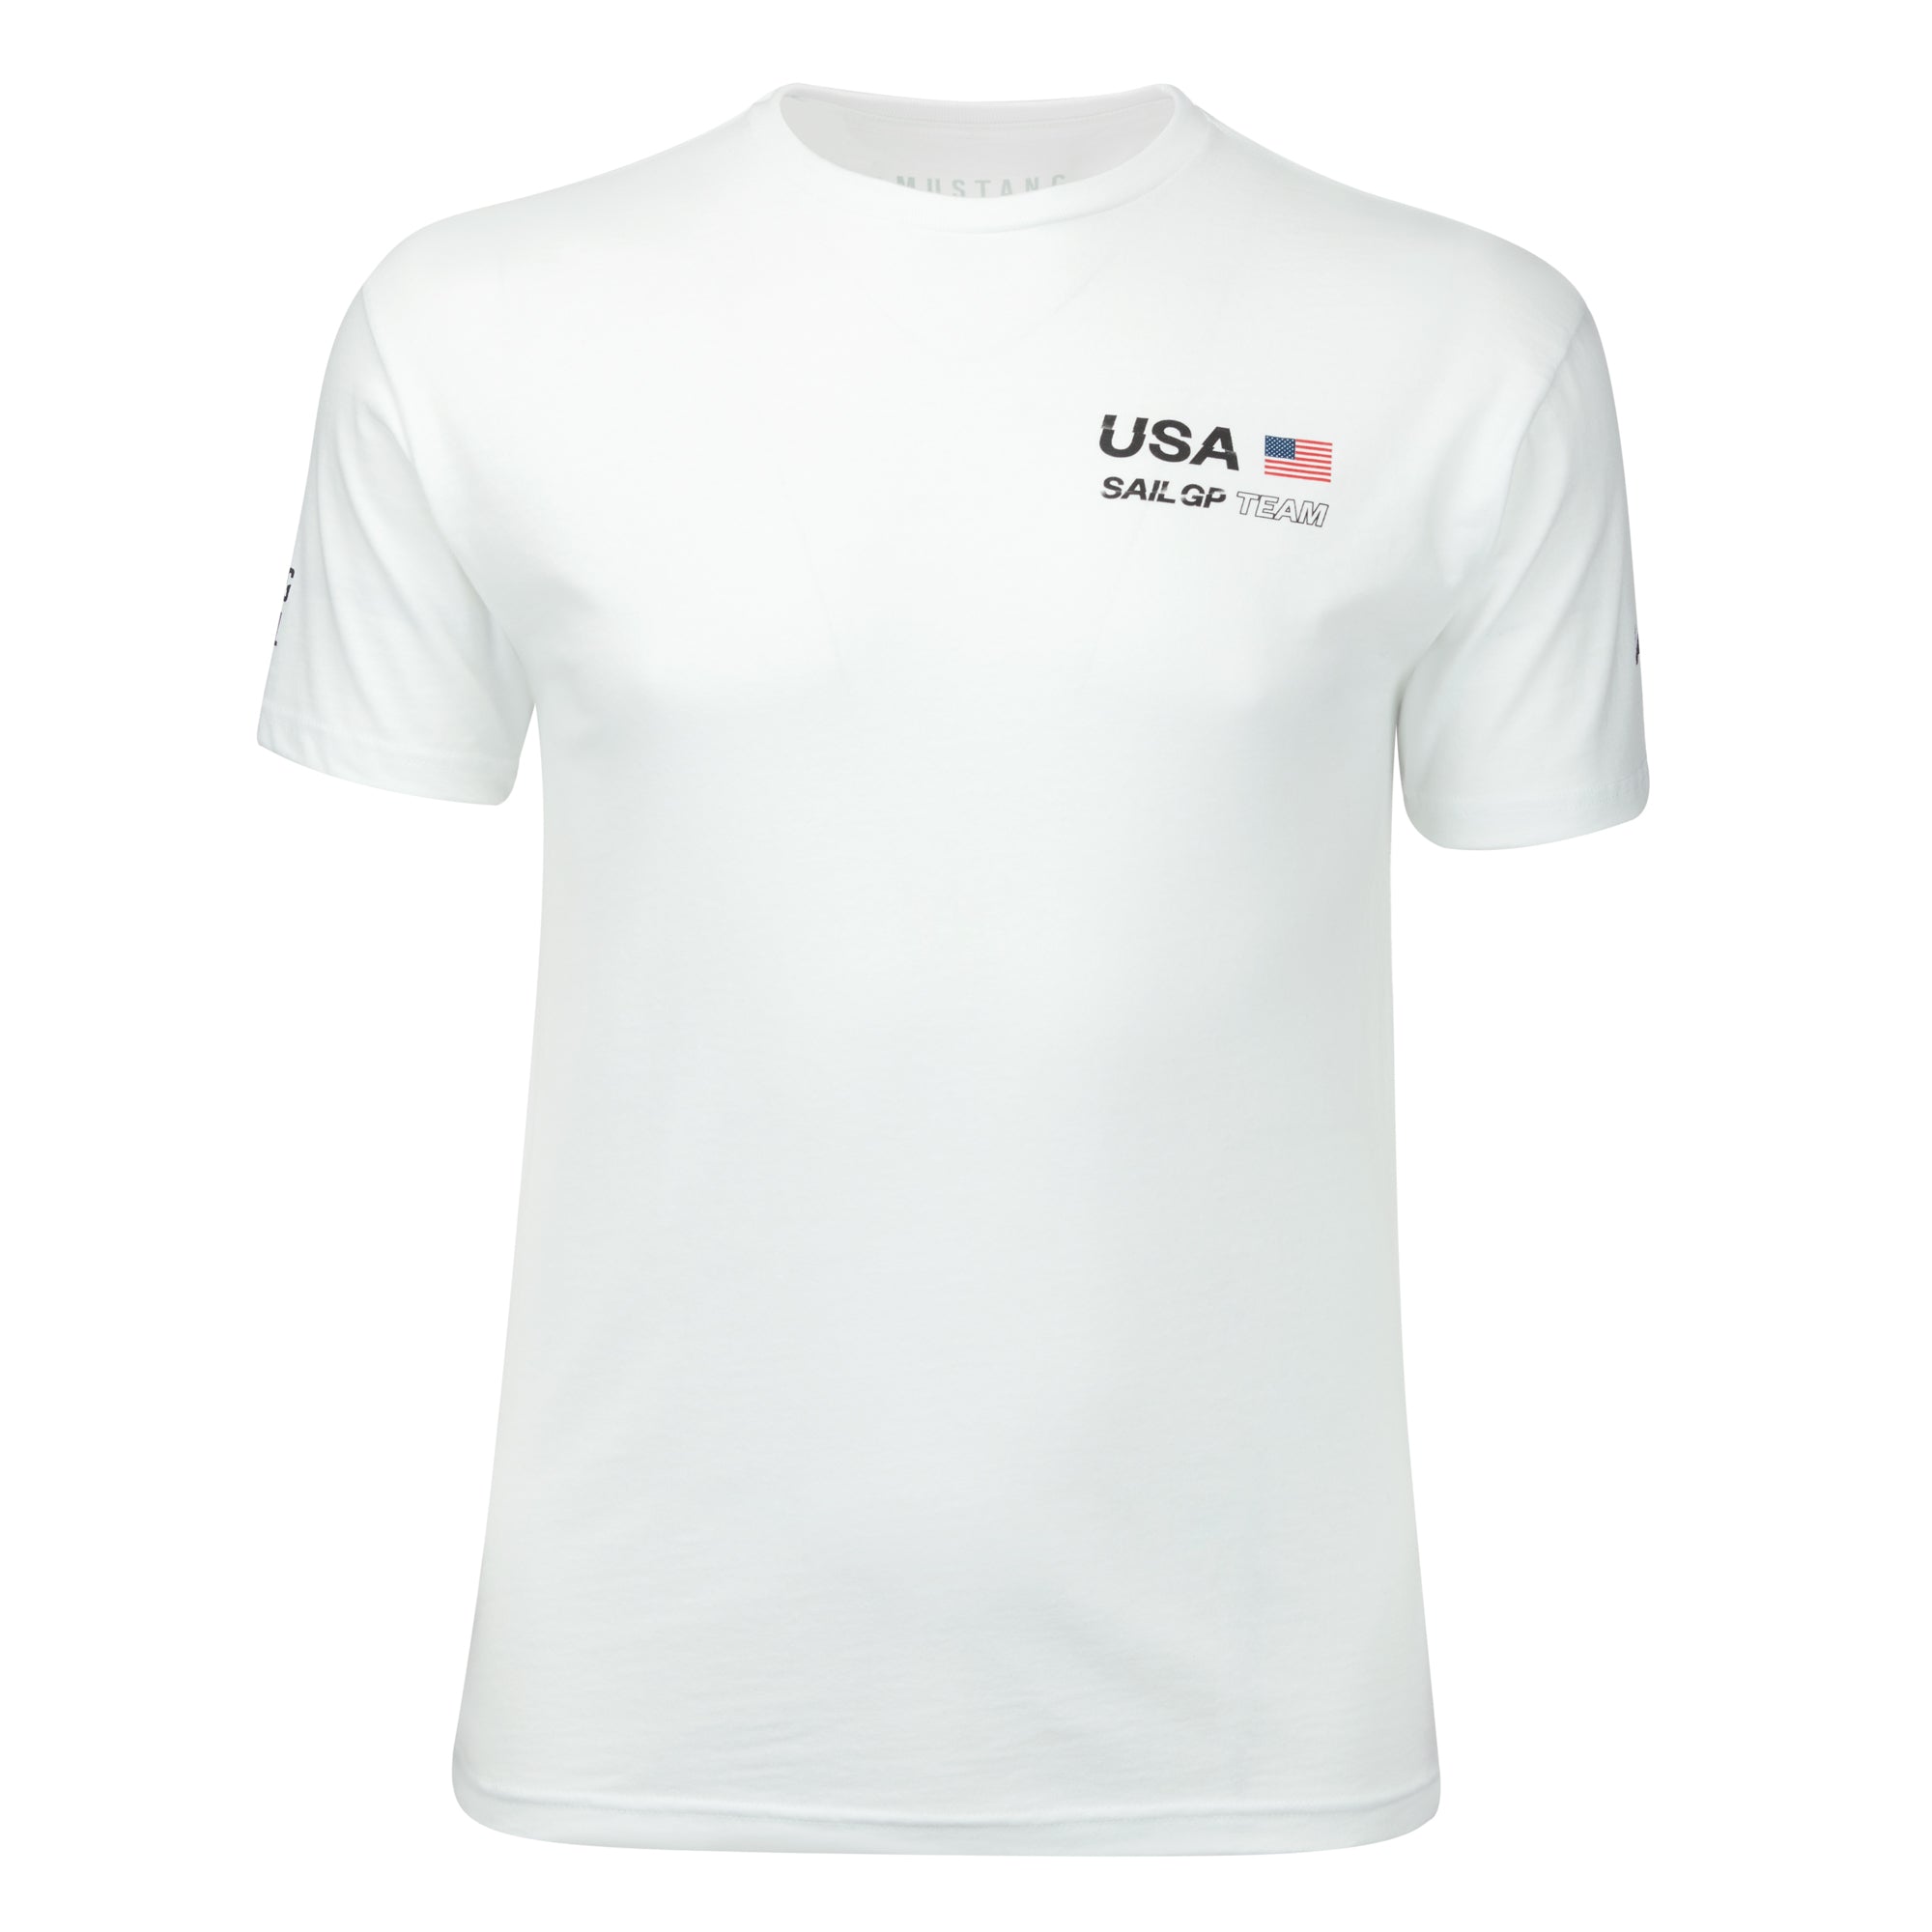 USA Team SailGP Unisex cotton tee fan